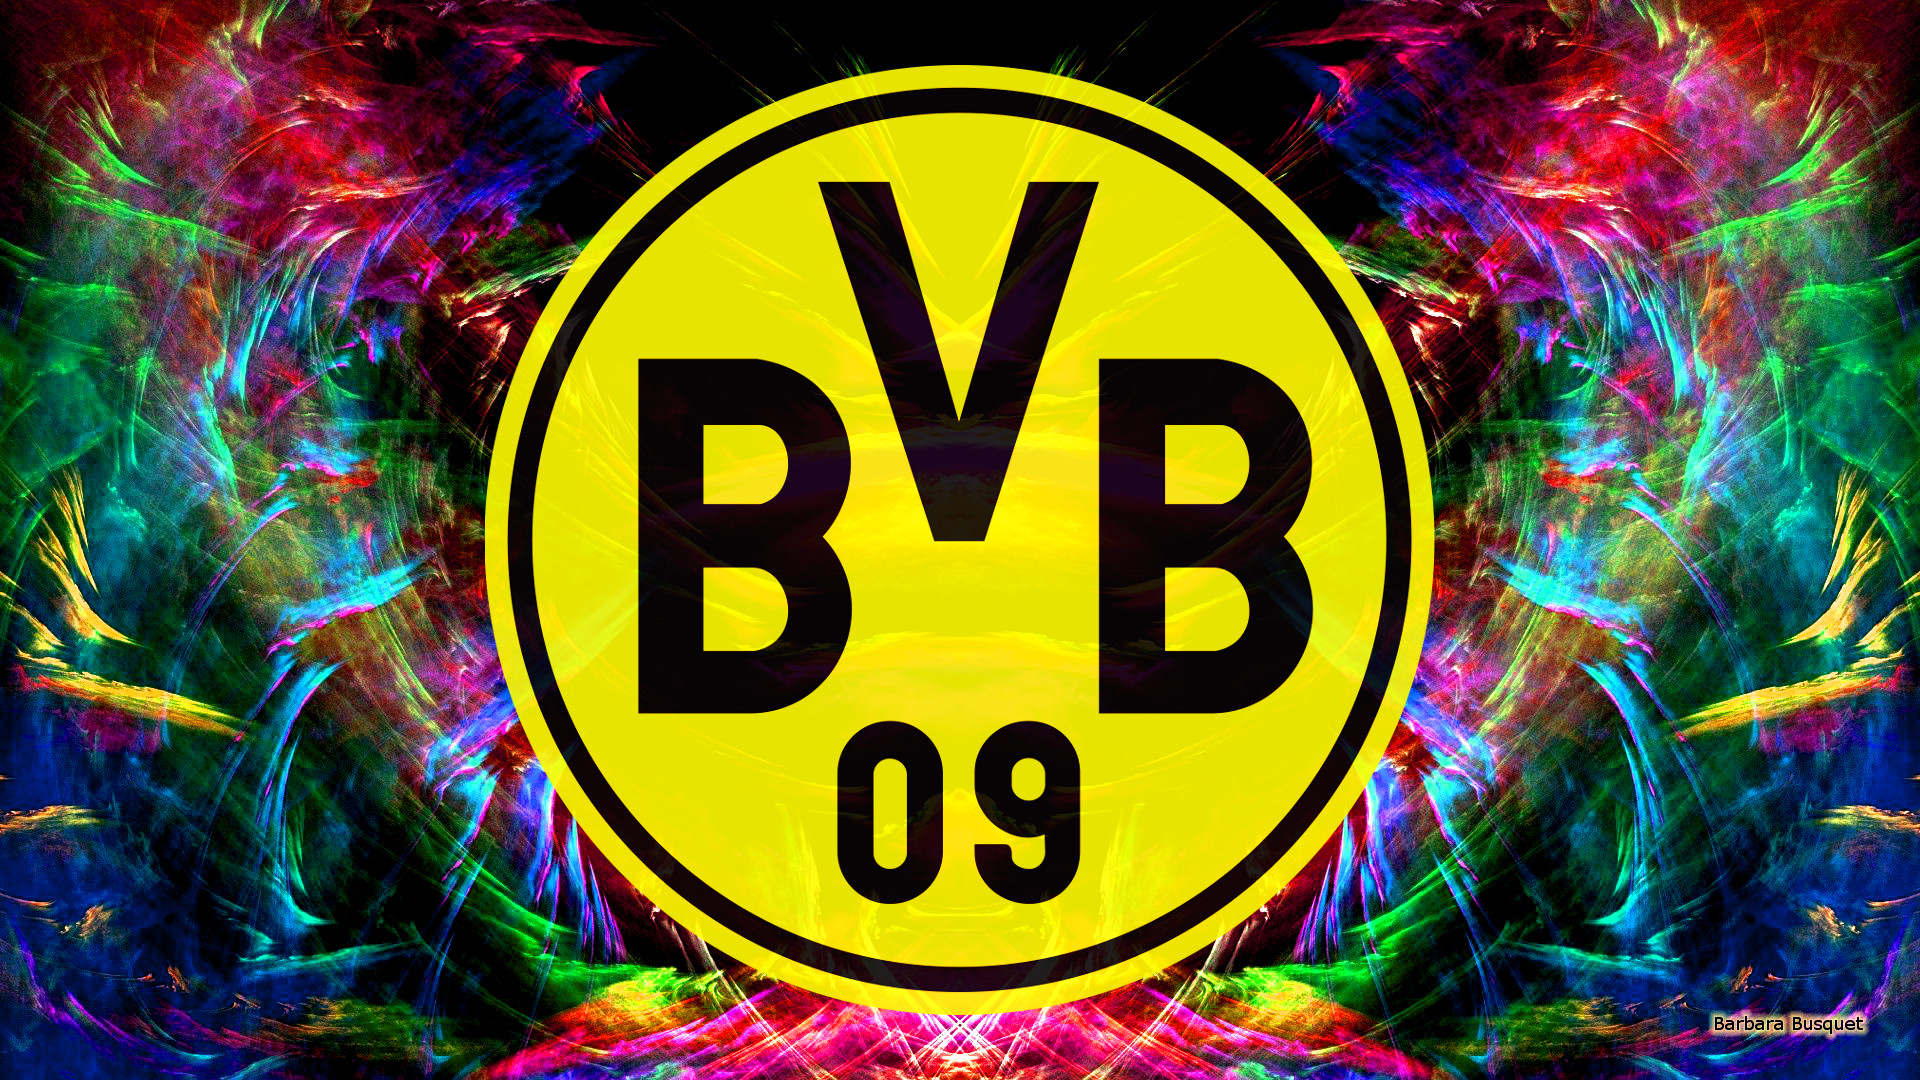 bvb, sports, borussia dortmund, emblem, logo, soccer